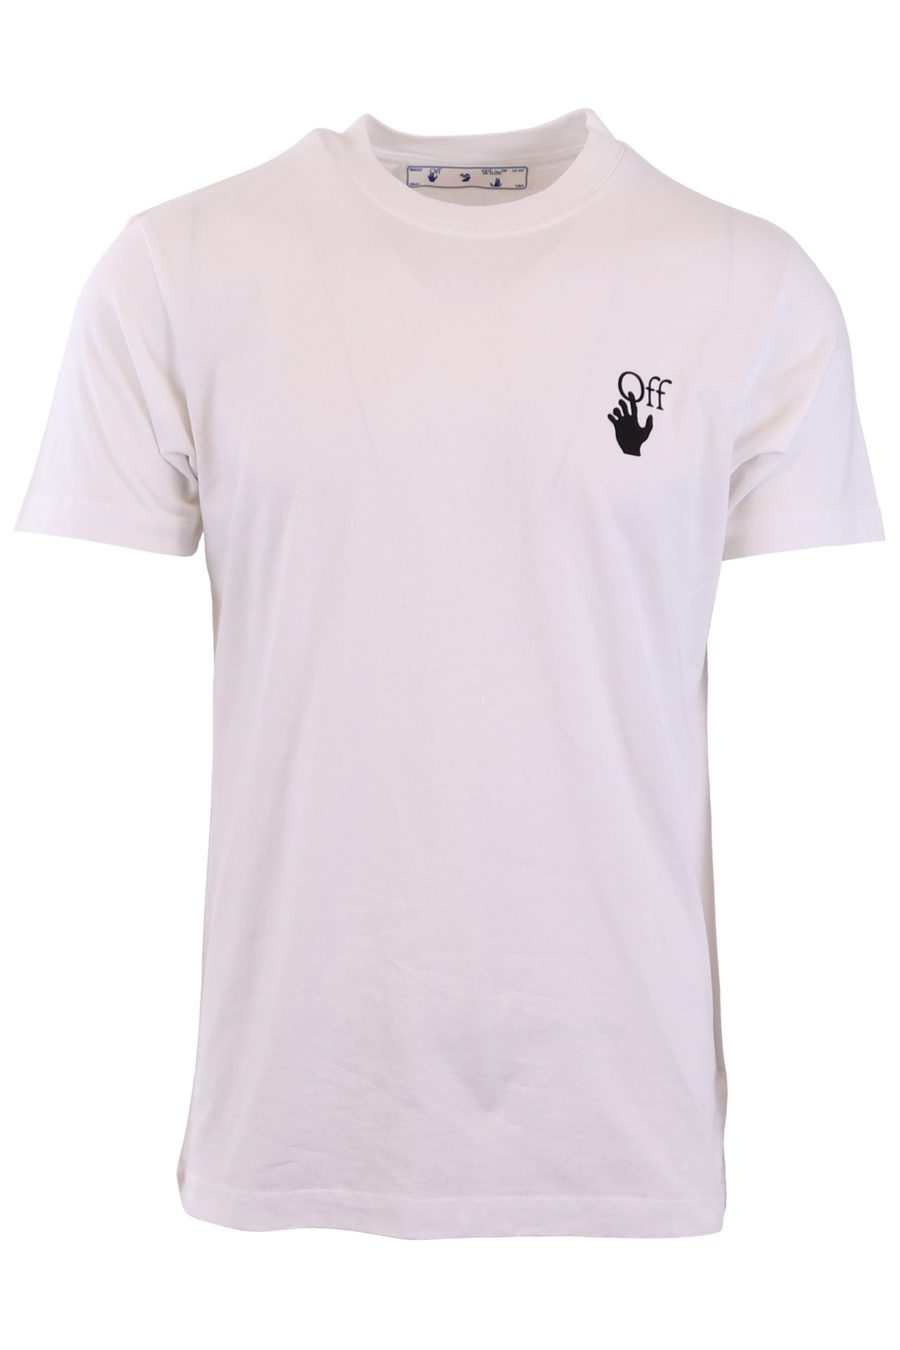 Off-White T-shirt blanc avec flèches rouges - 84f5b2ec14f6b0533d4fb26e7a9decd5ed949954